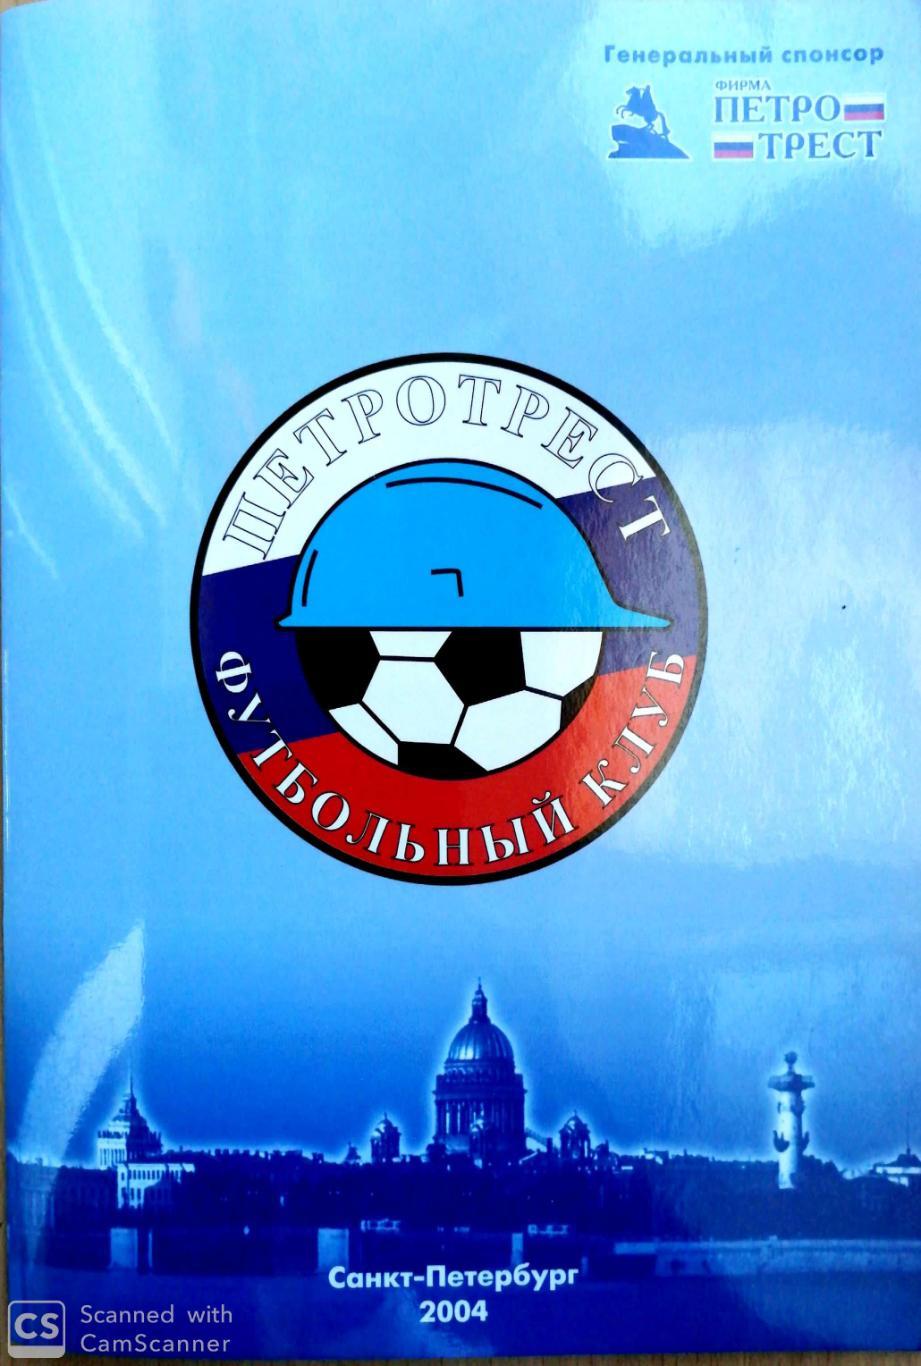 ФК Петротрест Санкт-Петербург-2004